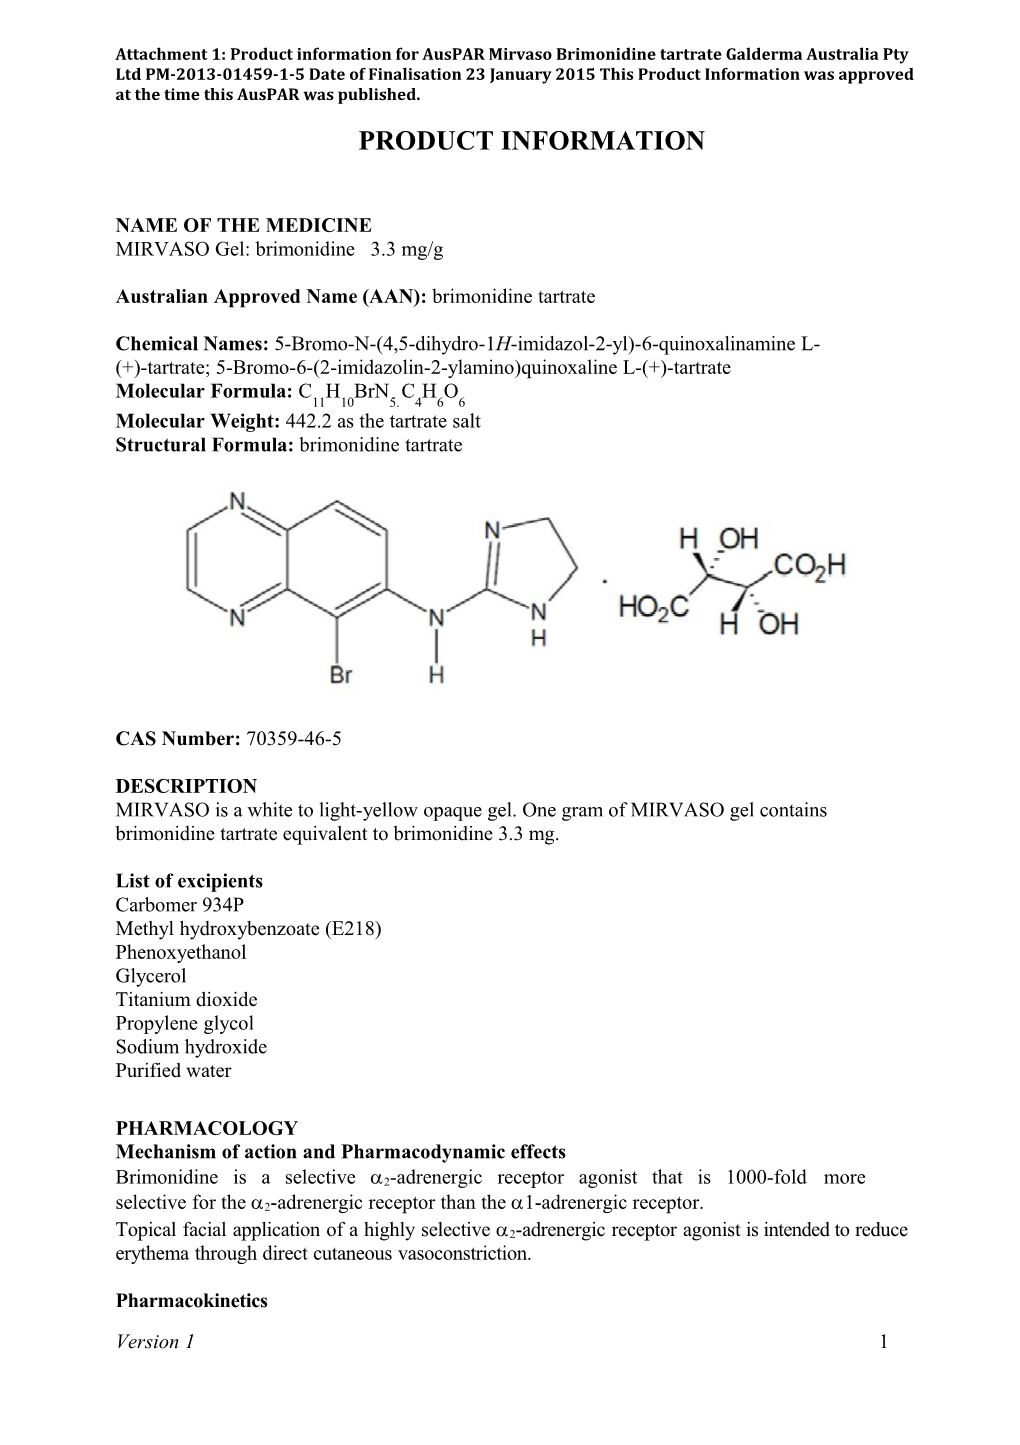 Auspar Attachment 1: Product Information for Brimonidine Tartrate (Mirvaso)